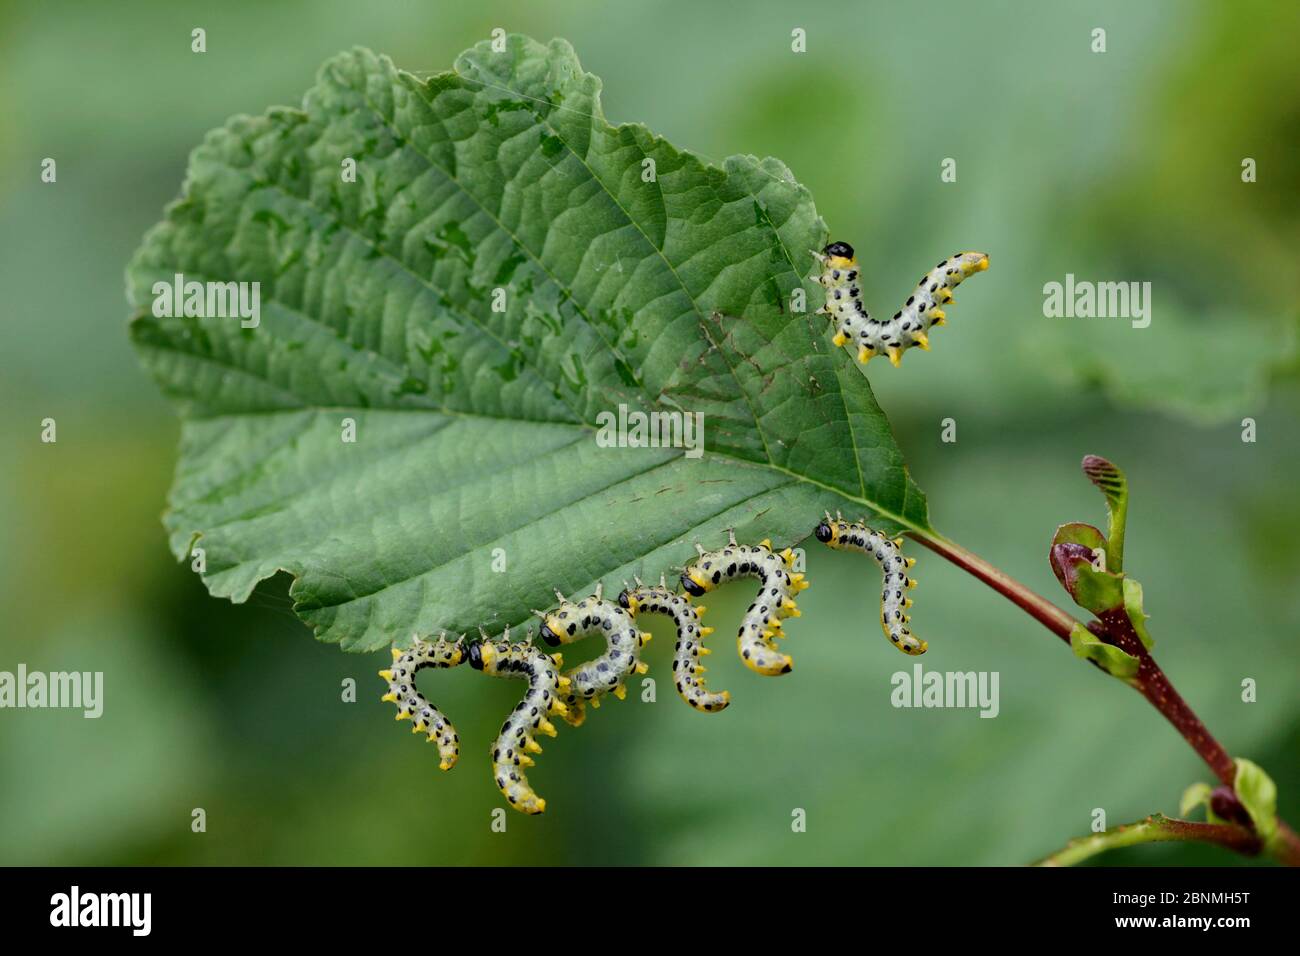 Dusky birch sawfly (Croesus septentrionalis) eating Alder leaves (Alnus glutinosa), Loire river, France, September. Stock Photo